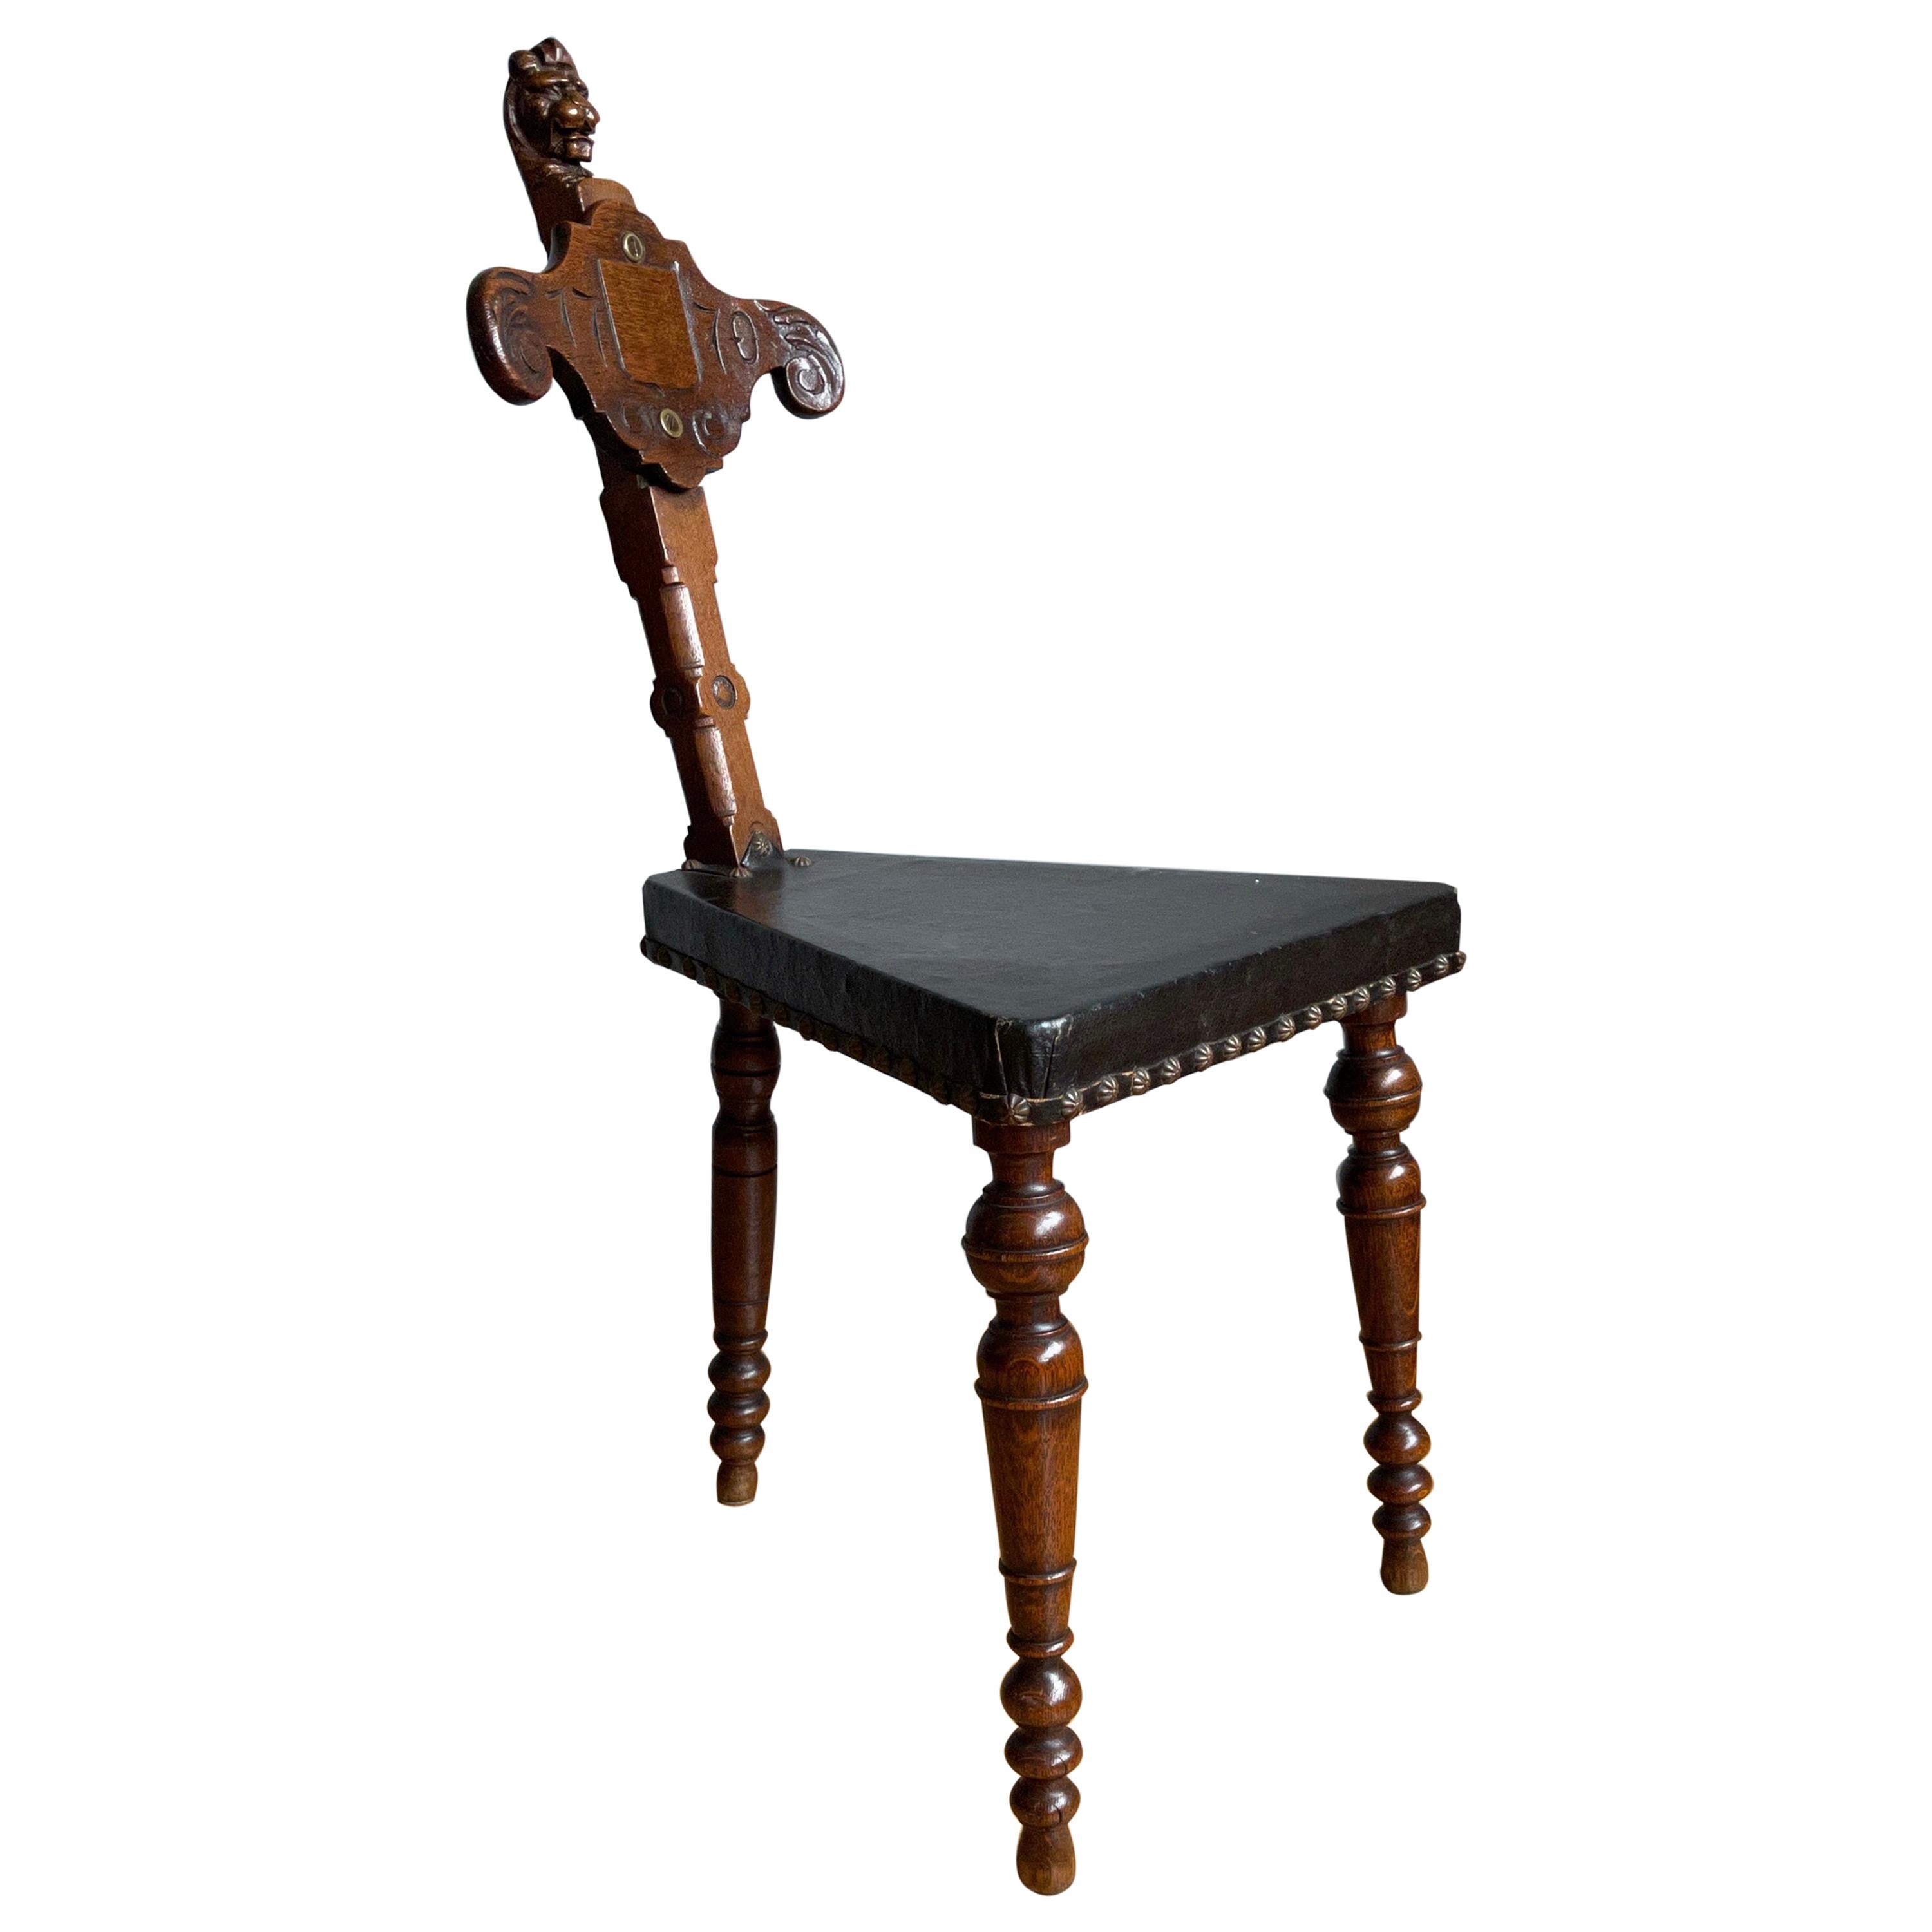 Unique 18th Century Renaissance Revival Carved Oak Three-Legged Chair with Lion